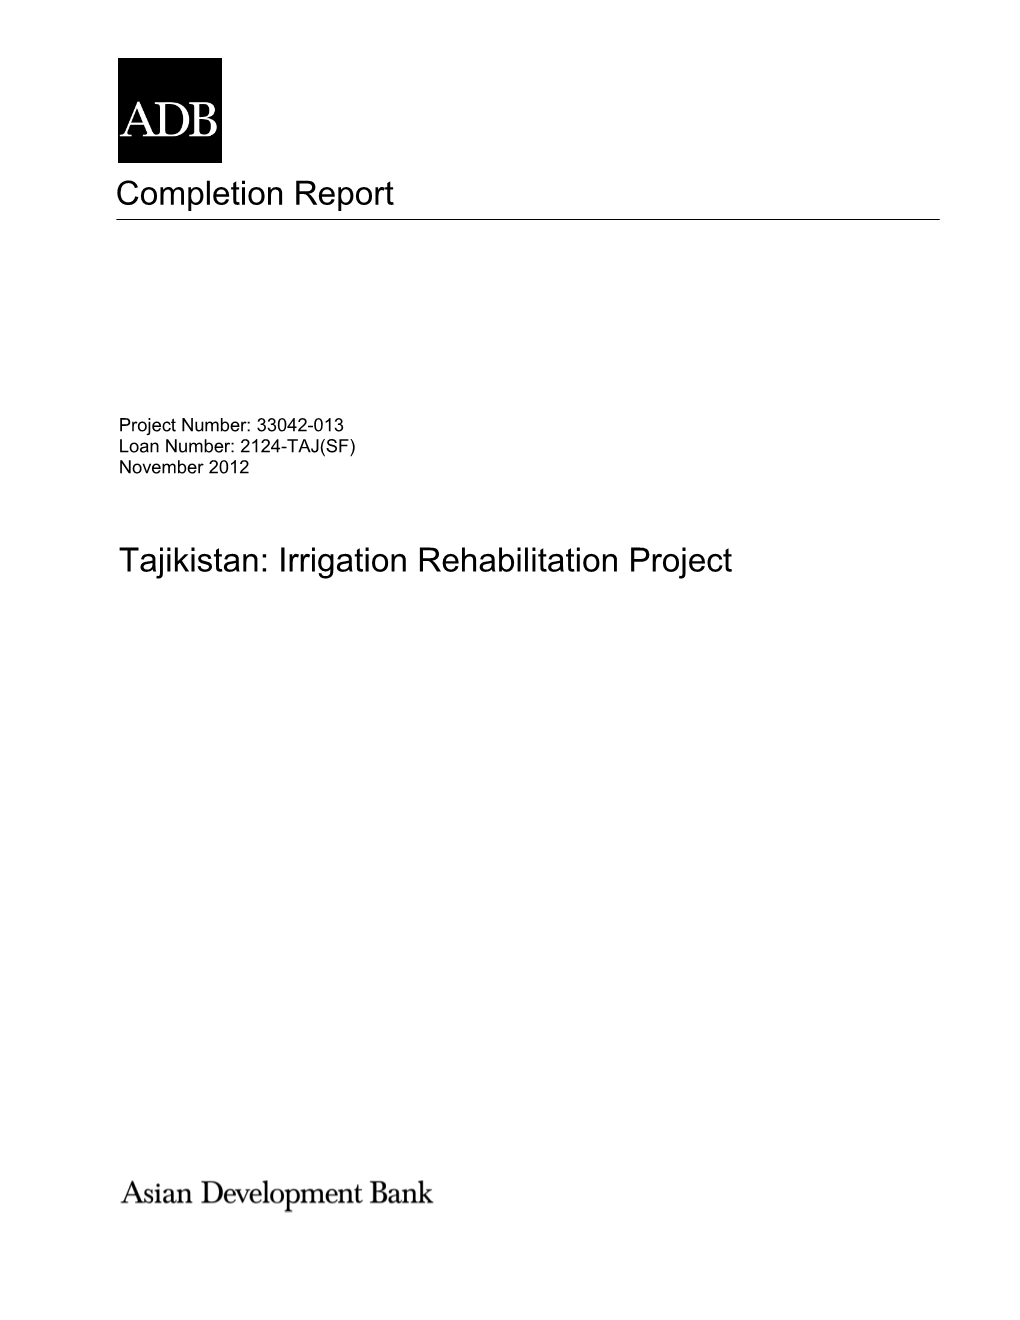 Completion Report Tajikistan: Irrigation Rehabilitation Project